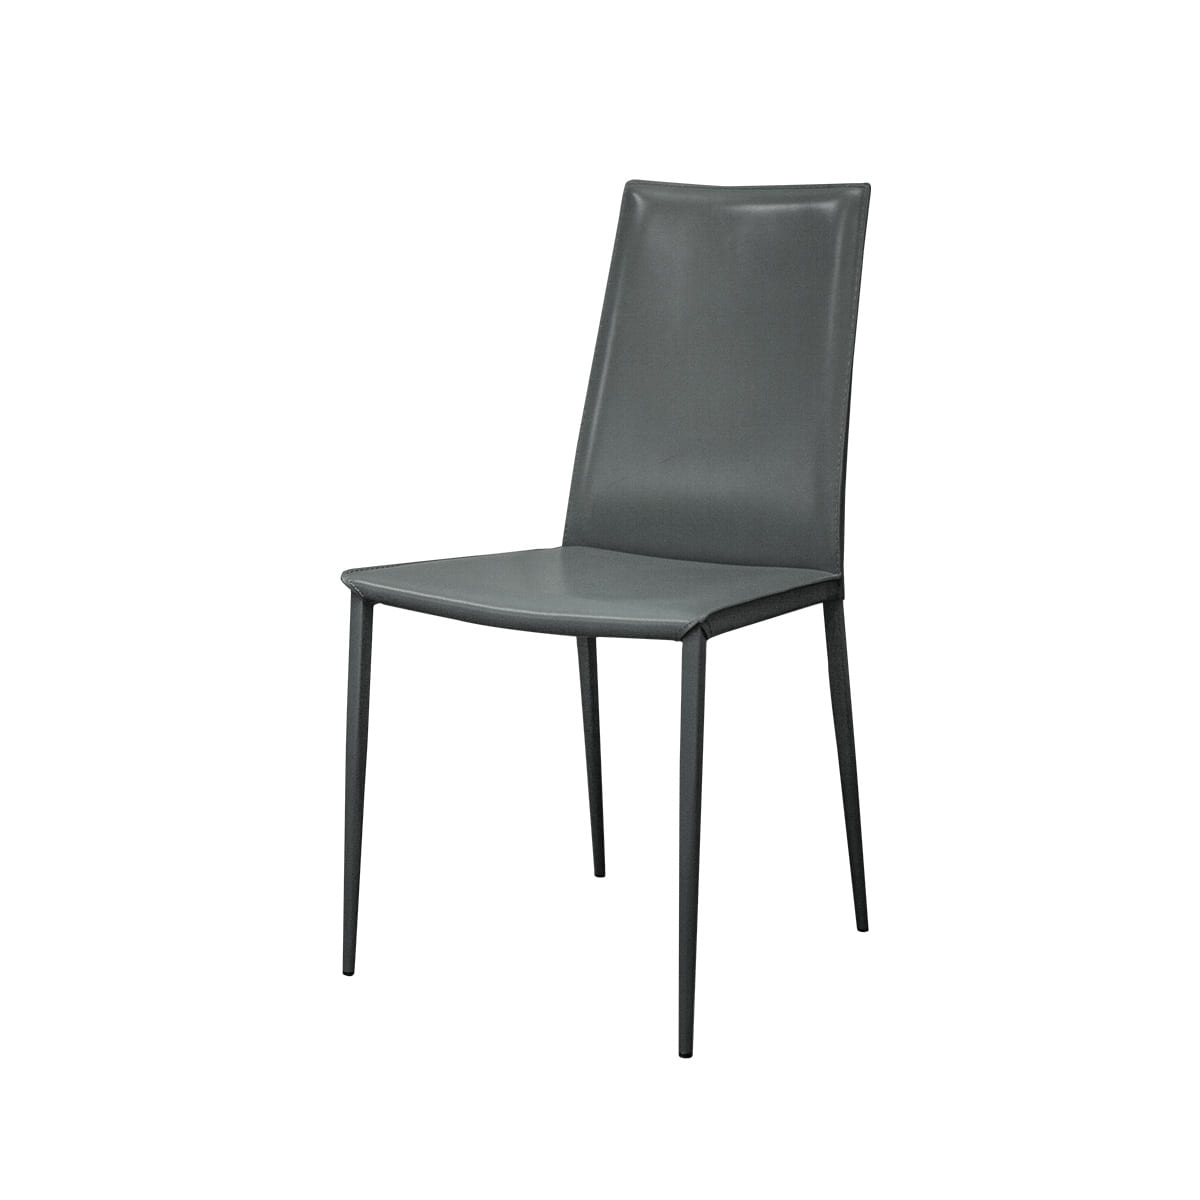 ITALSTUDIO Mina Dining Chair  미나 식탁 의자 (그레이)DESIGNED BY ITALY